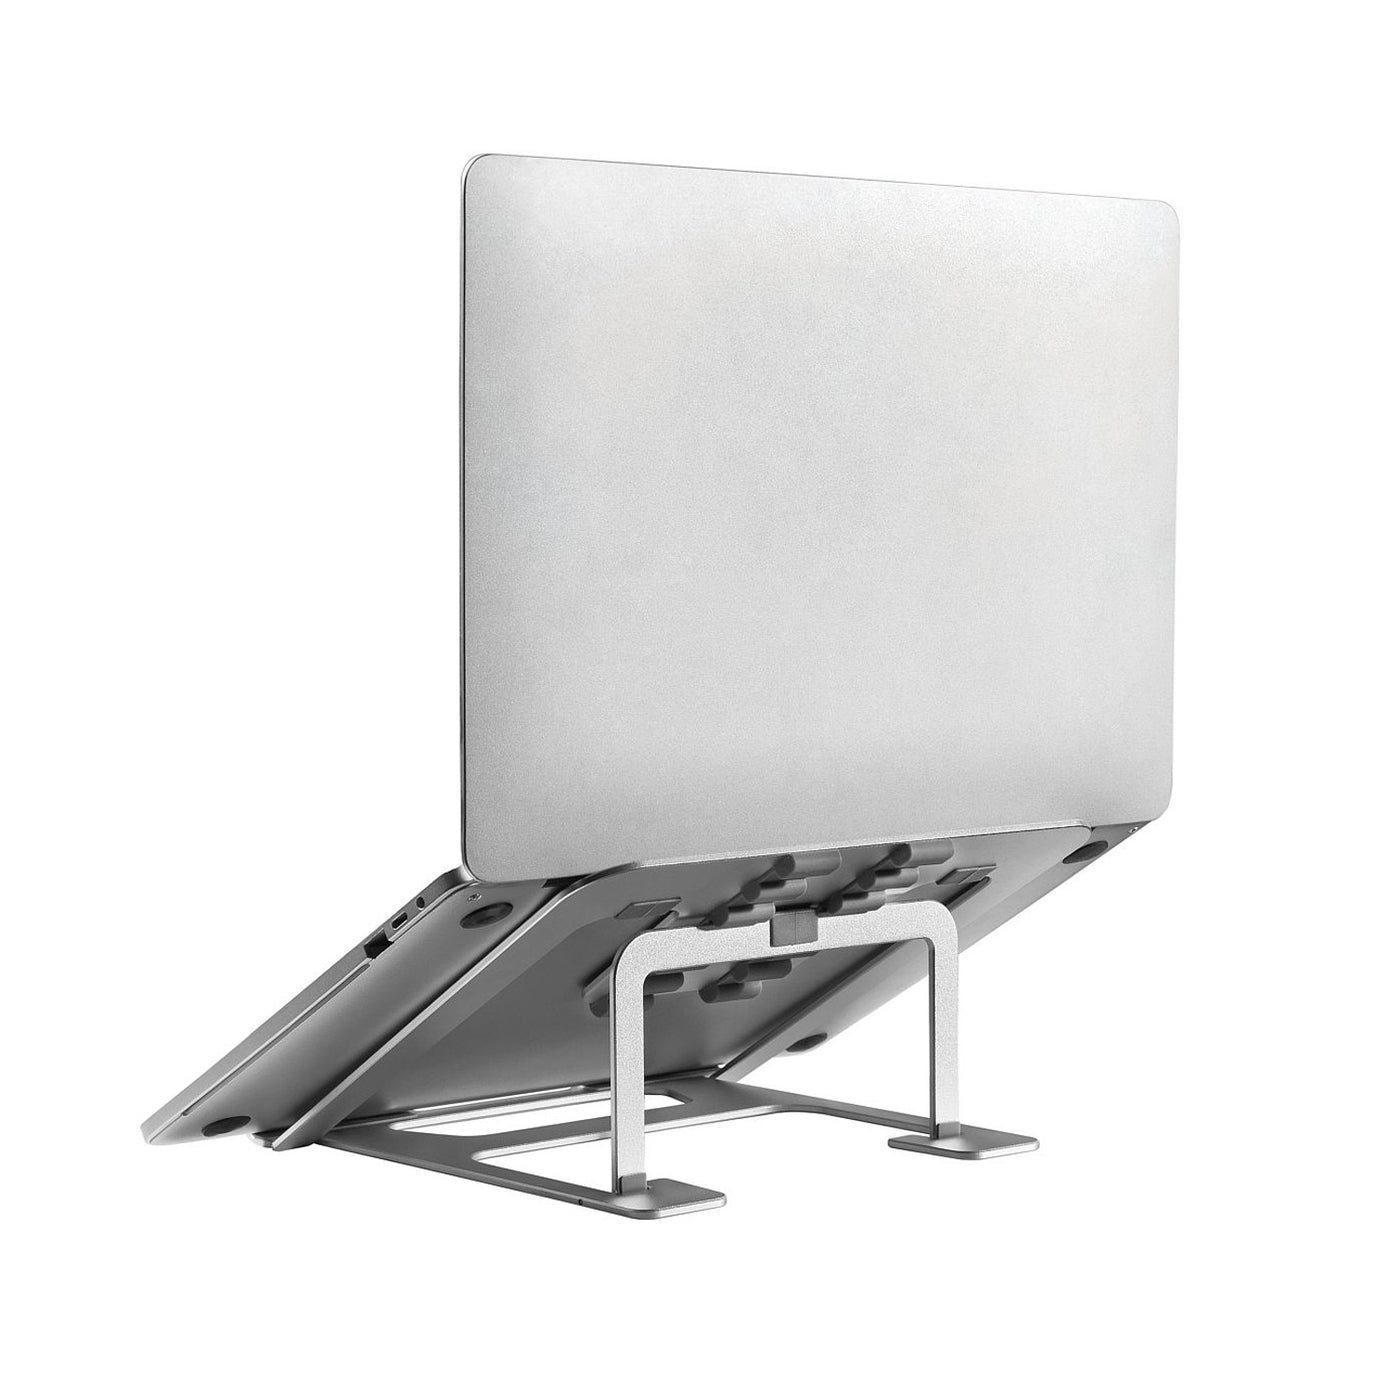 ERGOOFFICE ER-416 Ultra-thin Foldable Laptop Stand